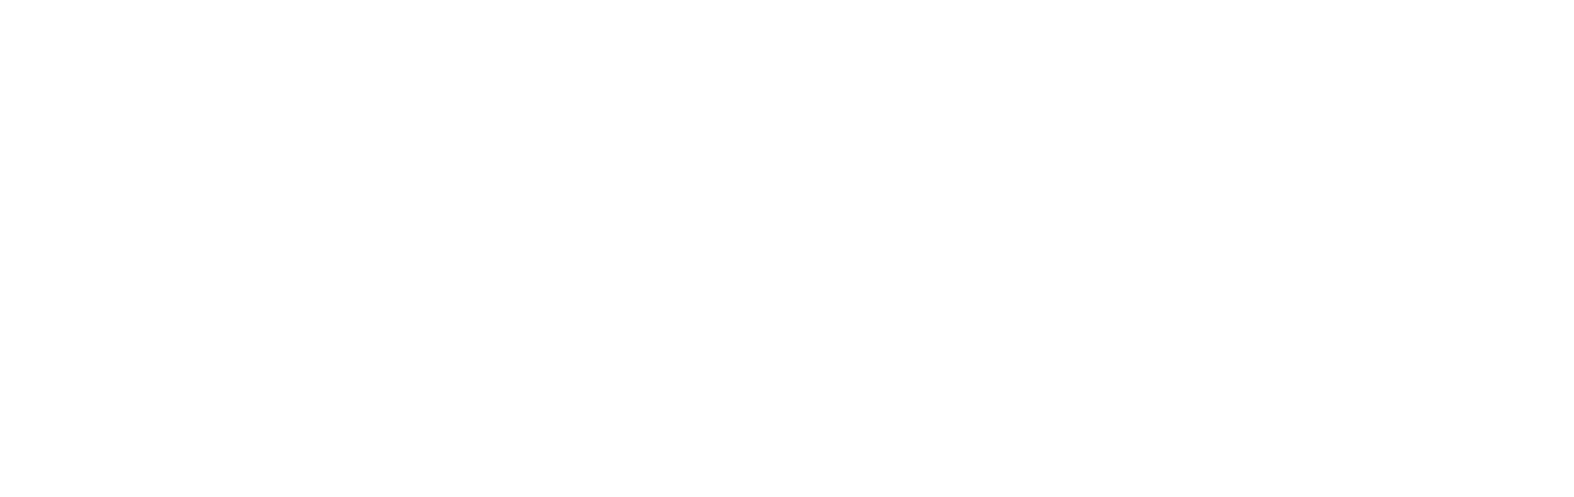 CorpHousing Group Logo groß für dunkle Hintergründe (transparentes PNG)